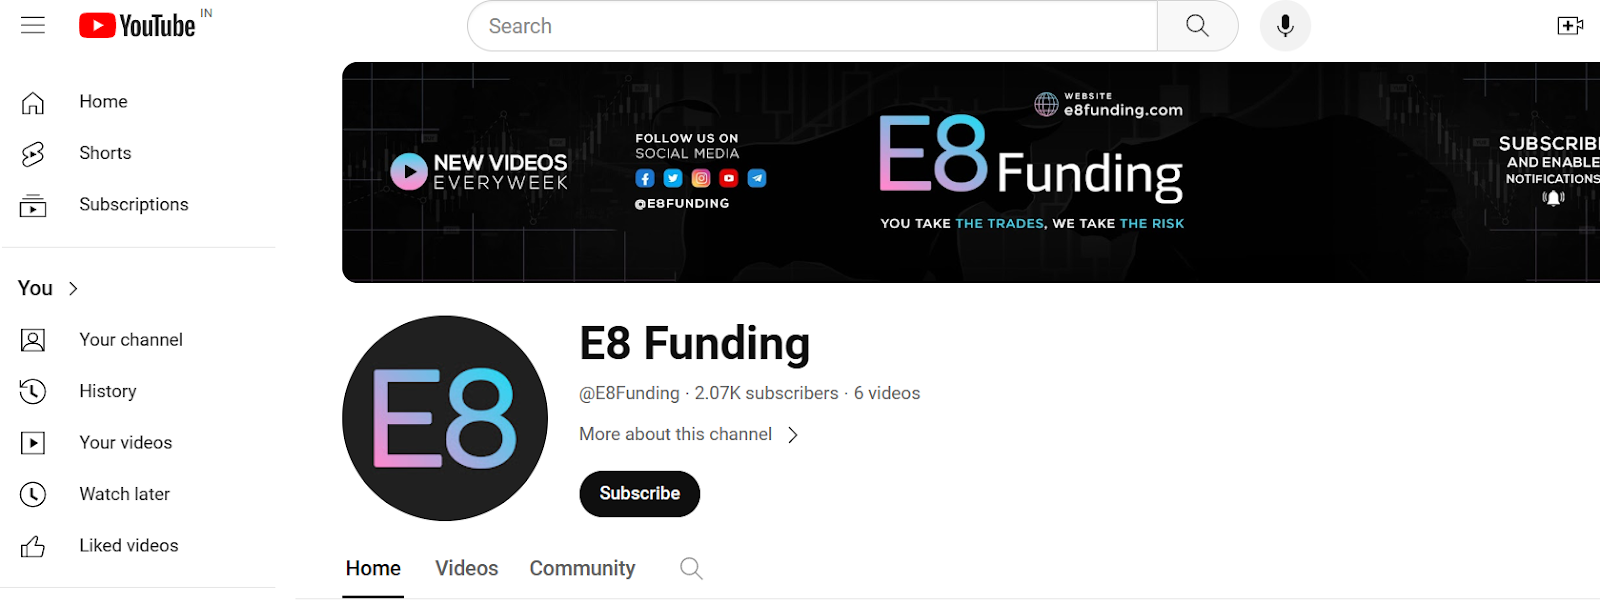 E8 Funding reviews on YouTube